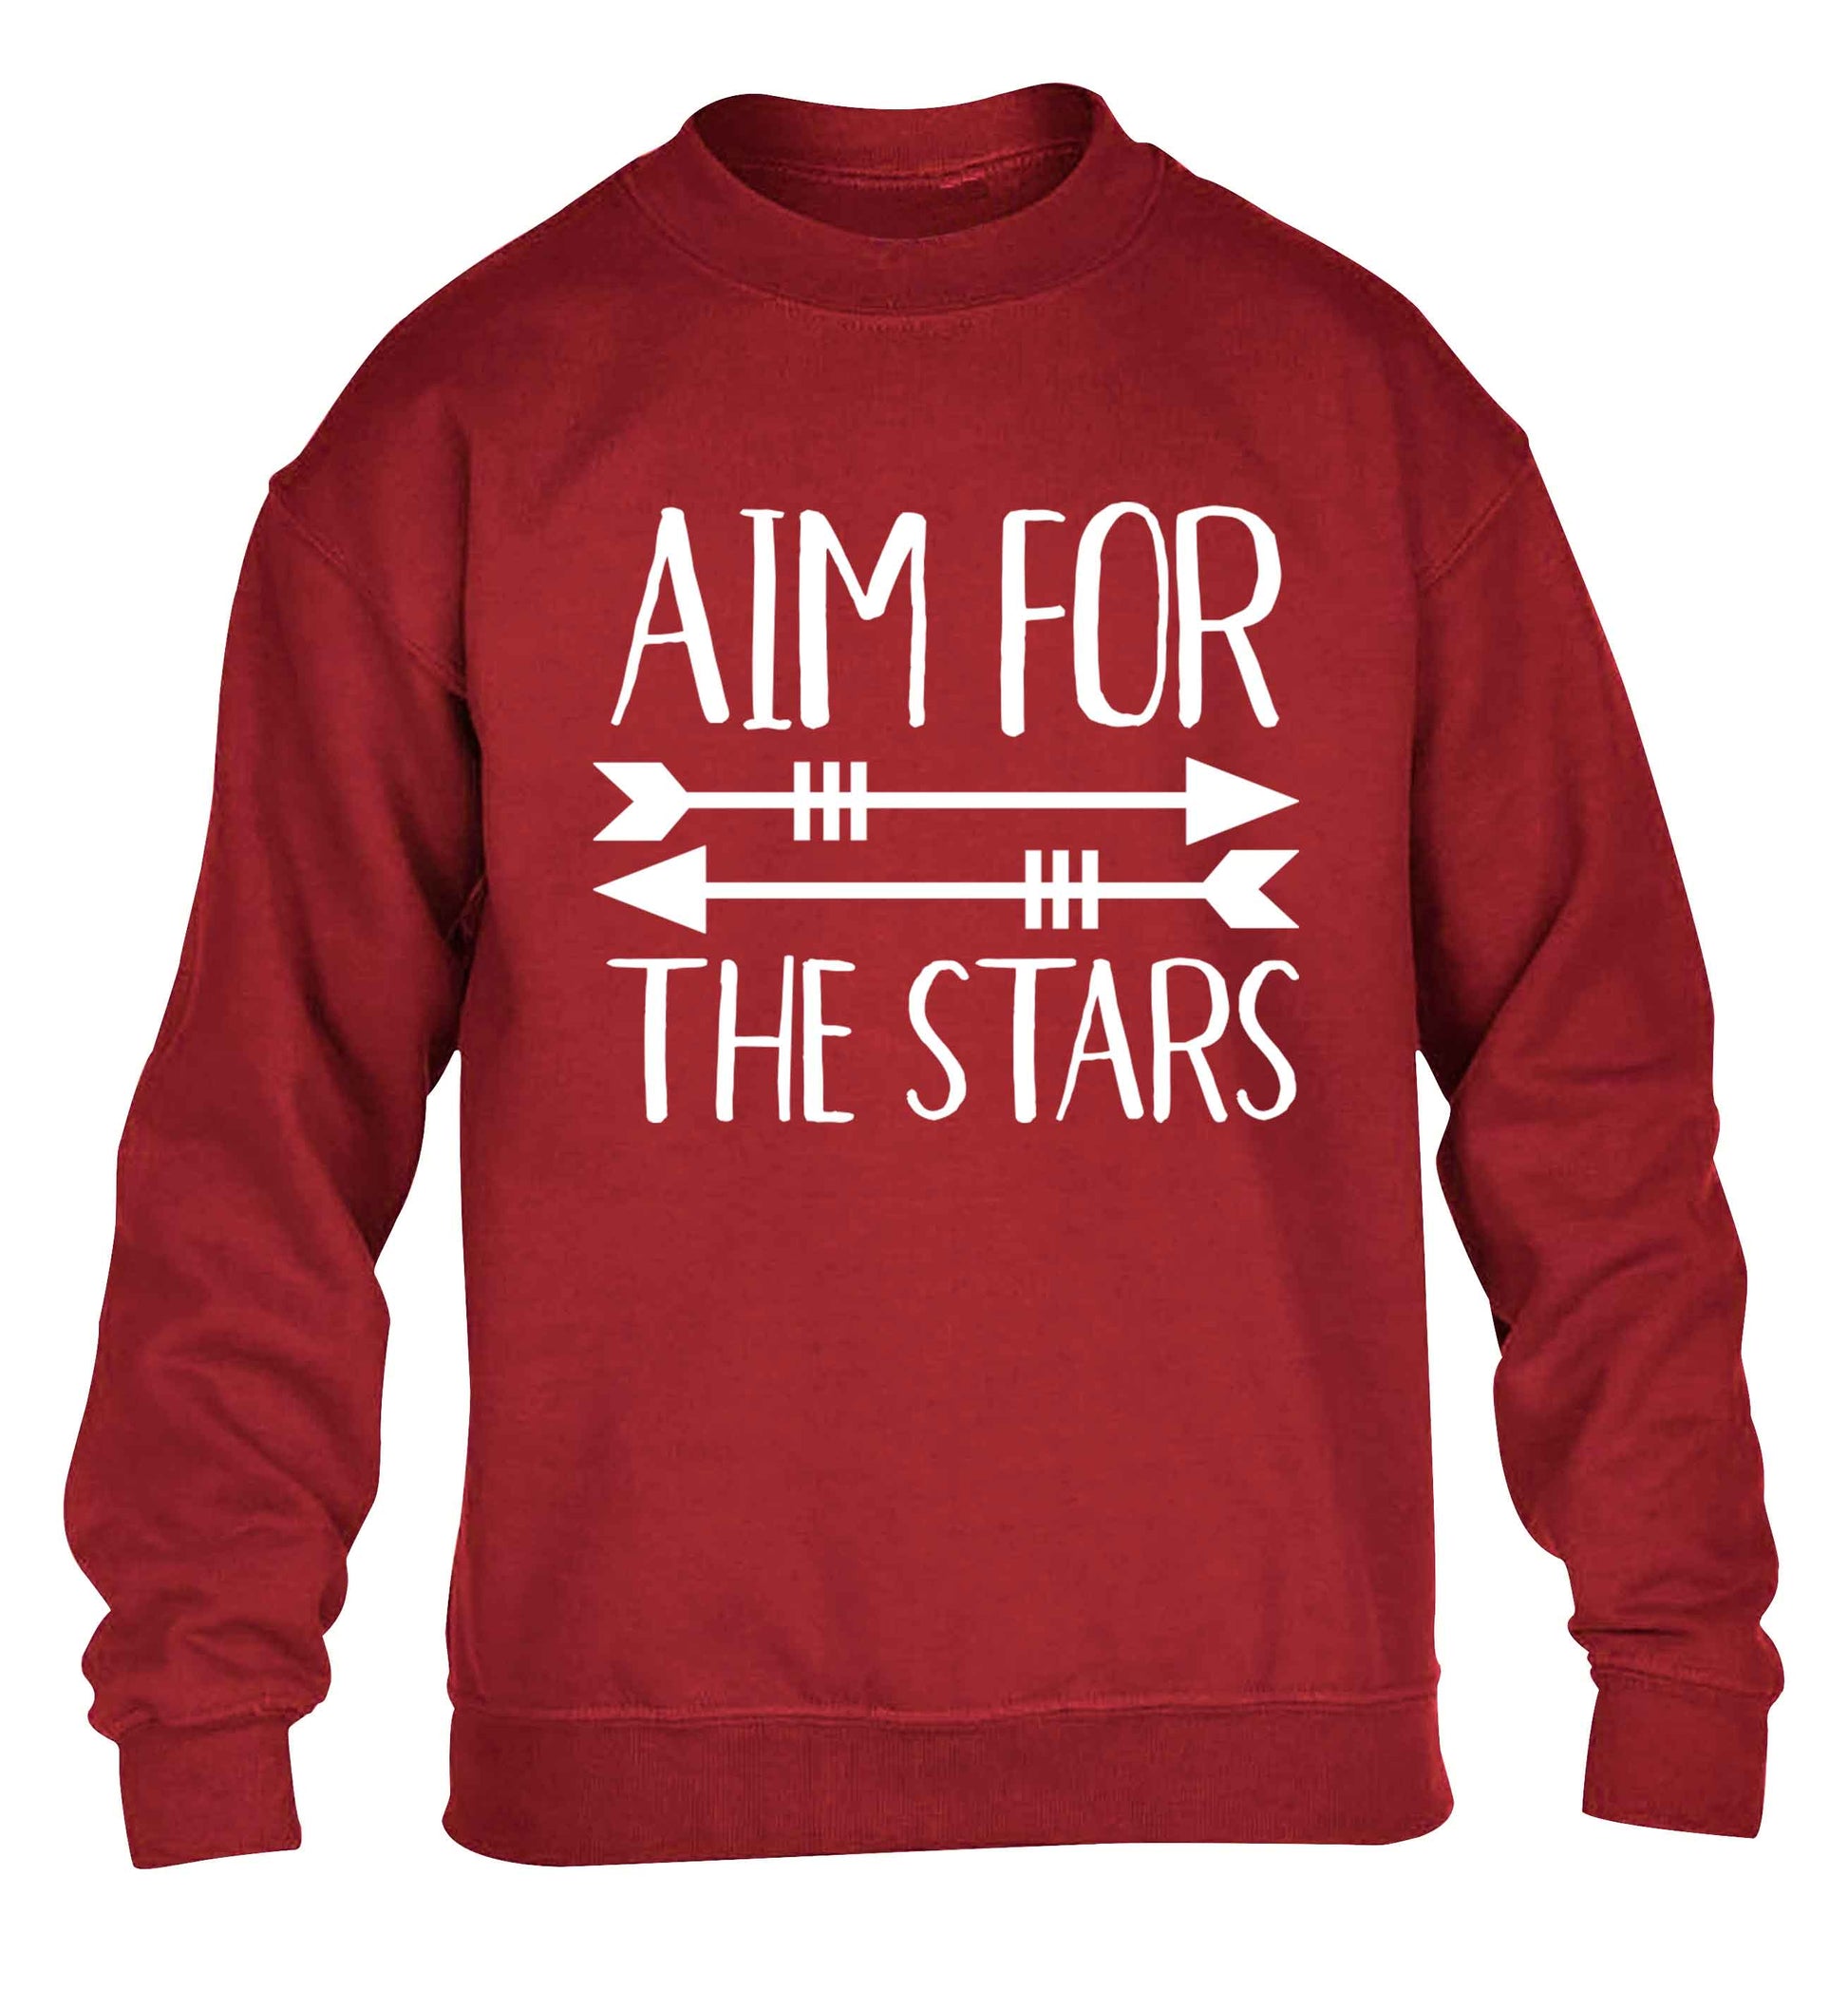 Aim for the stars children's grey sweater 12-13 Years